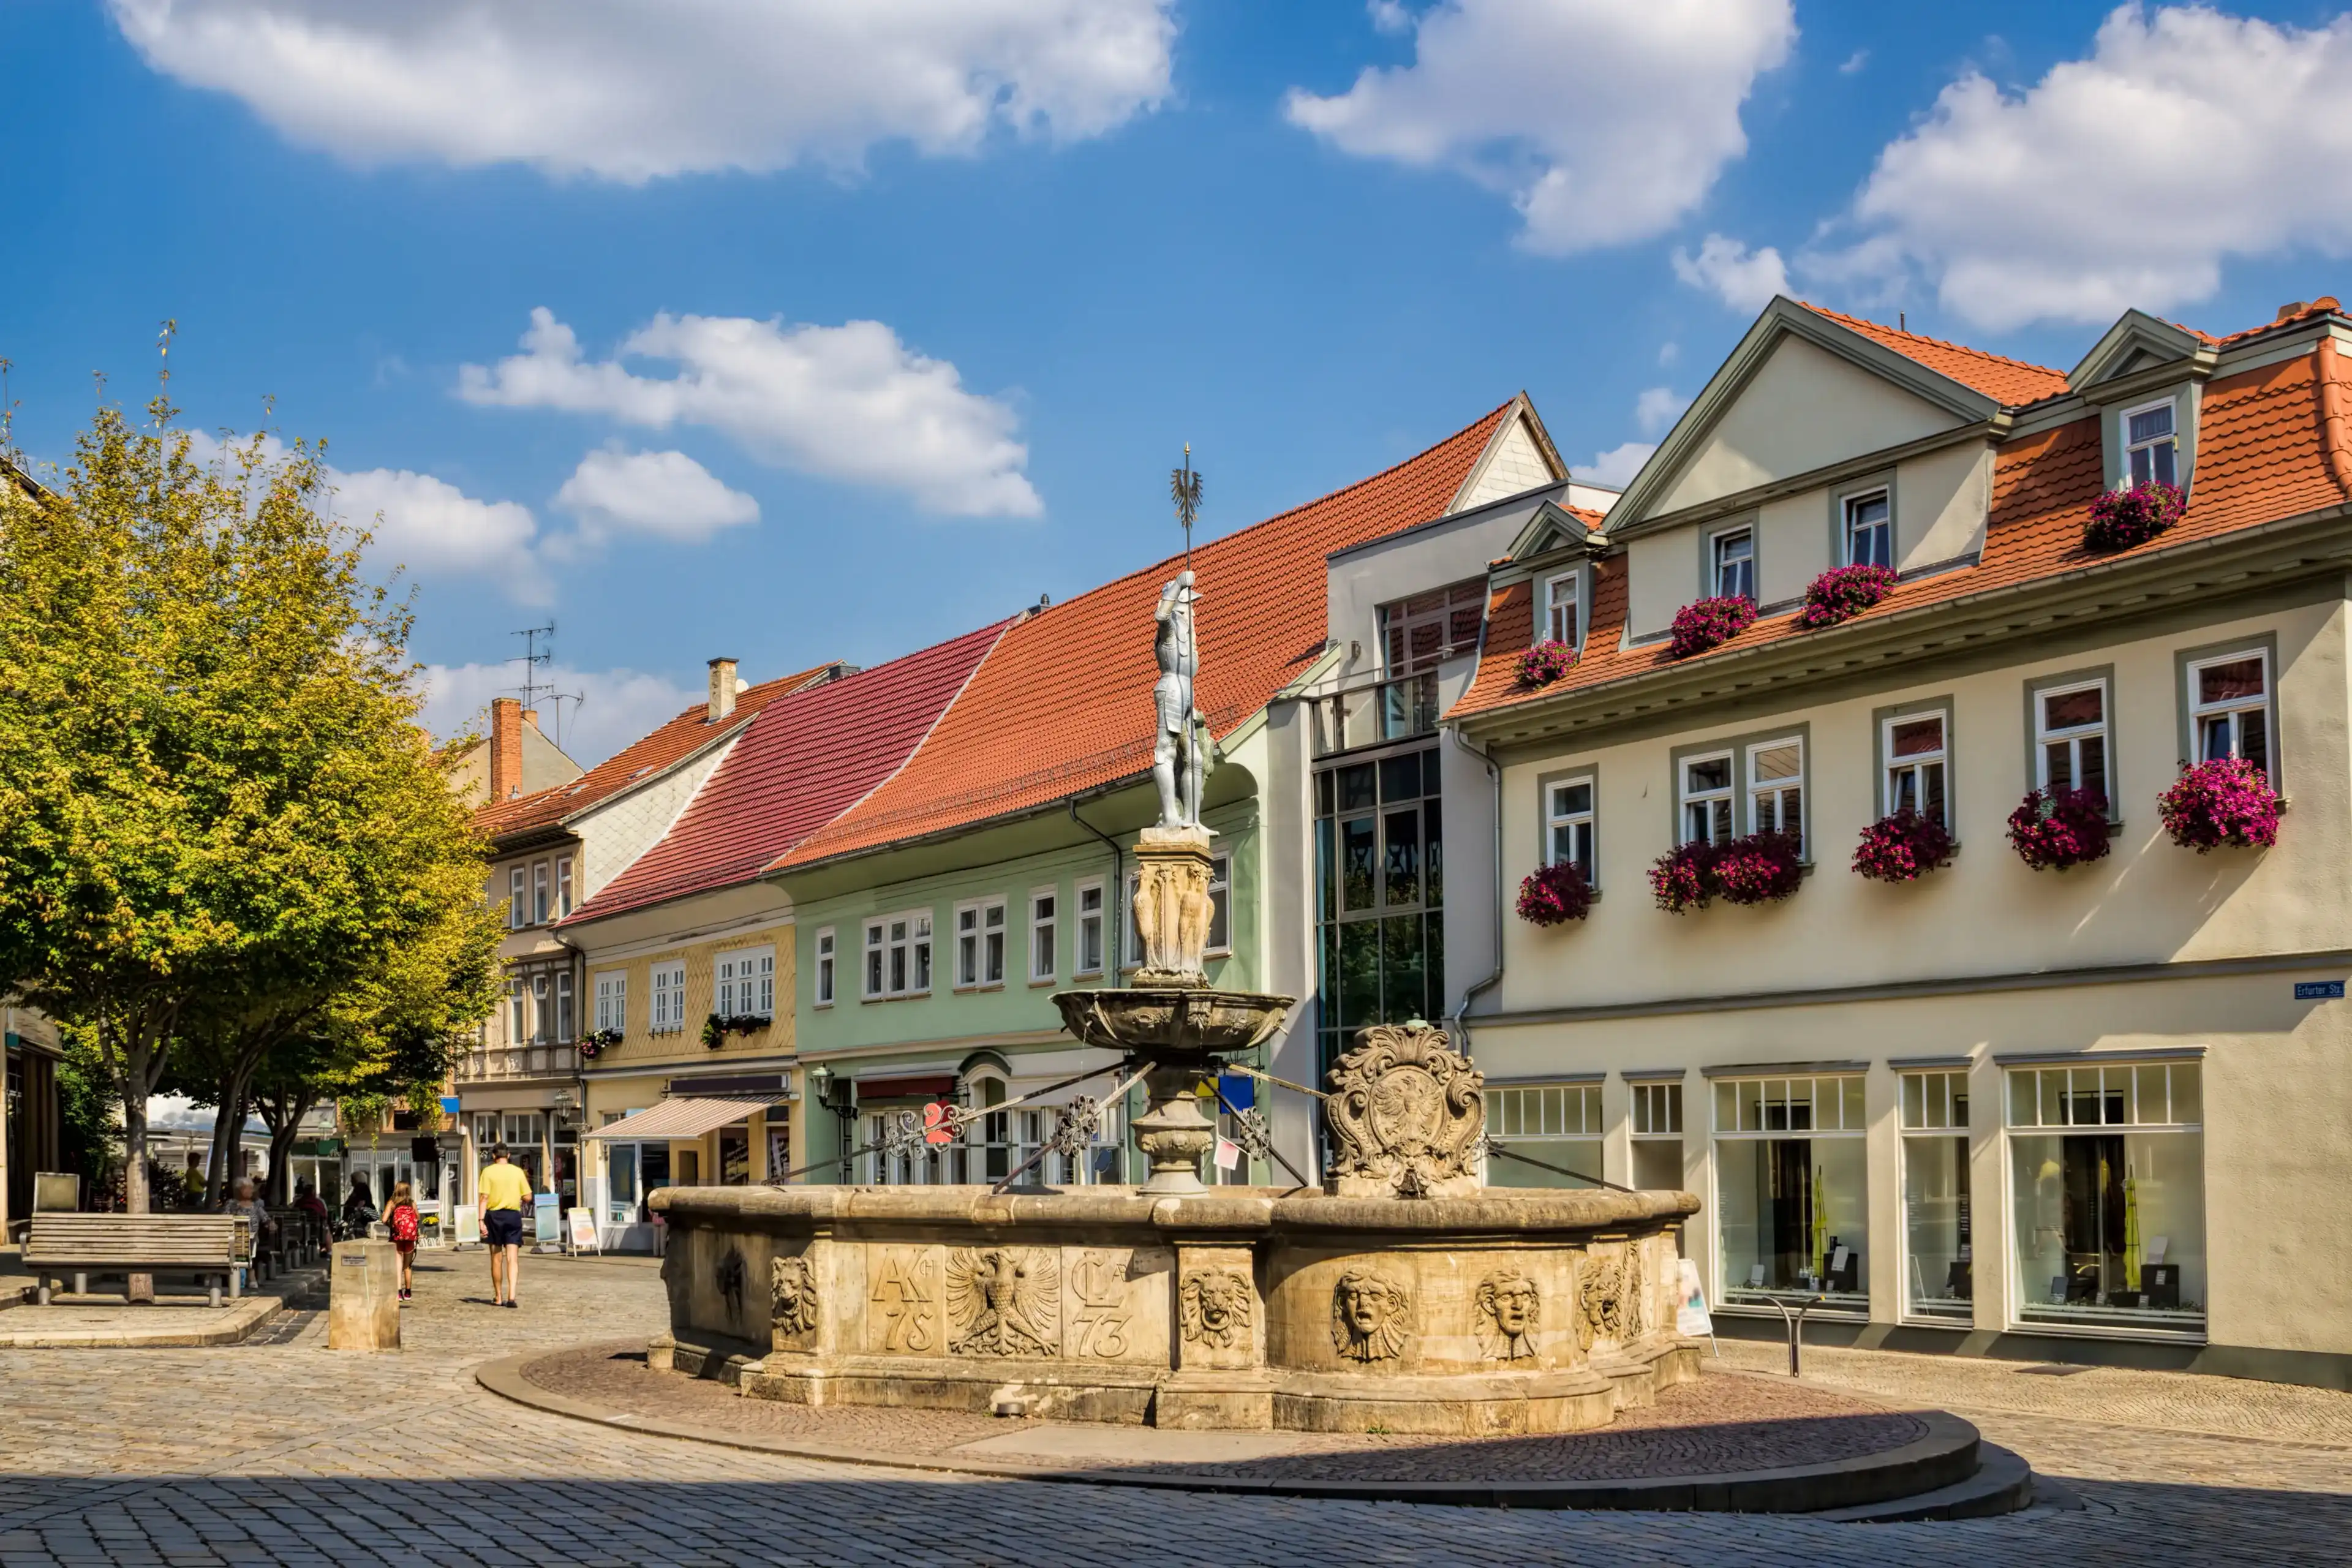 Best Arnstadt hotels. Cheap hotels in Arnstadt, Germany